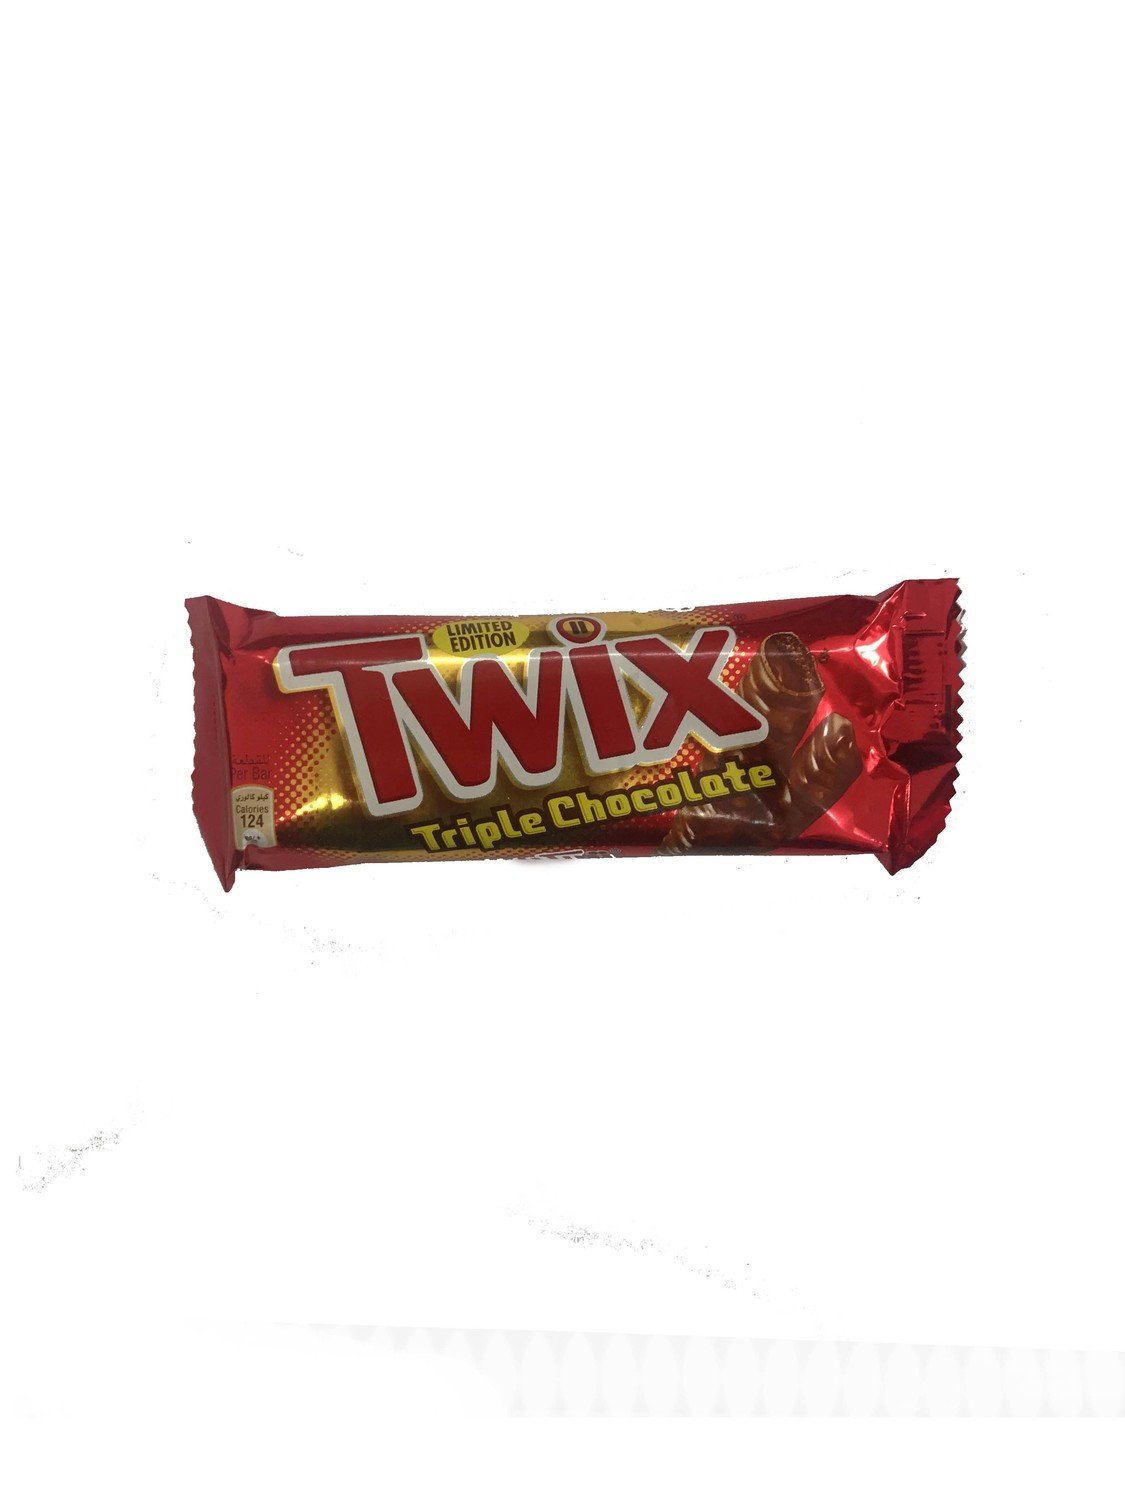 Twix Triple Chocolate (Limited Edition)